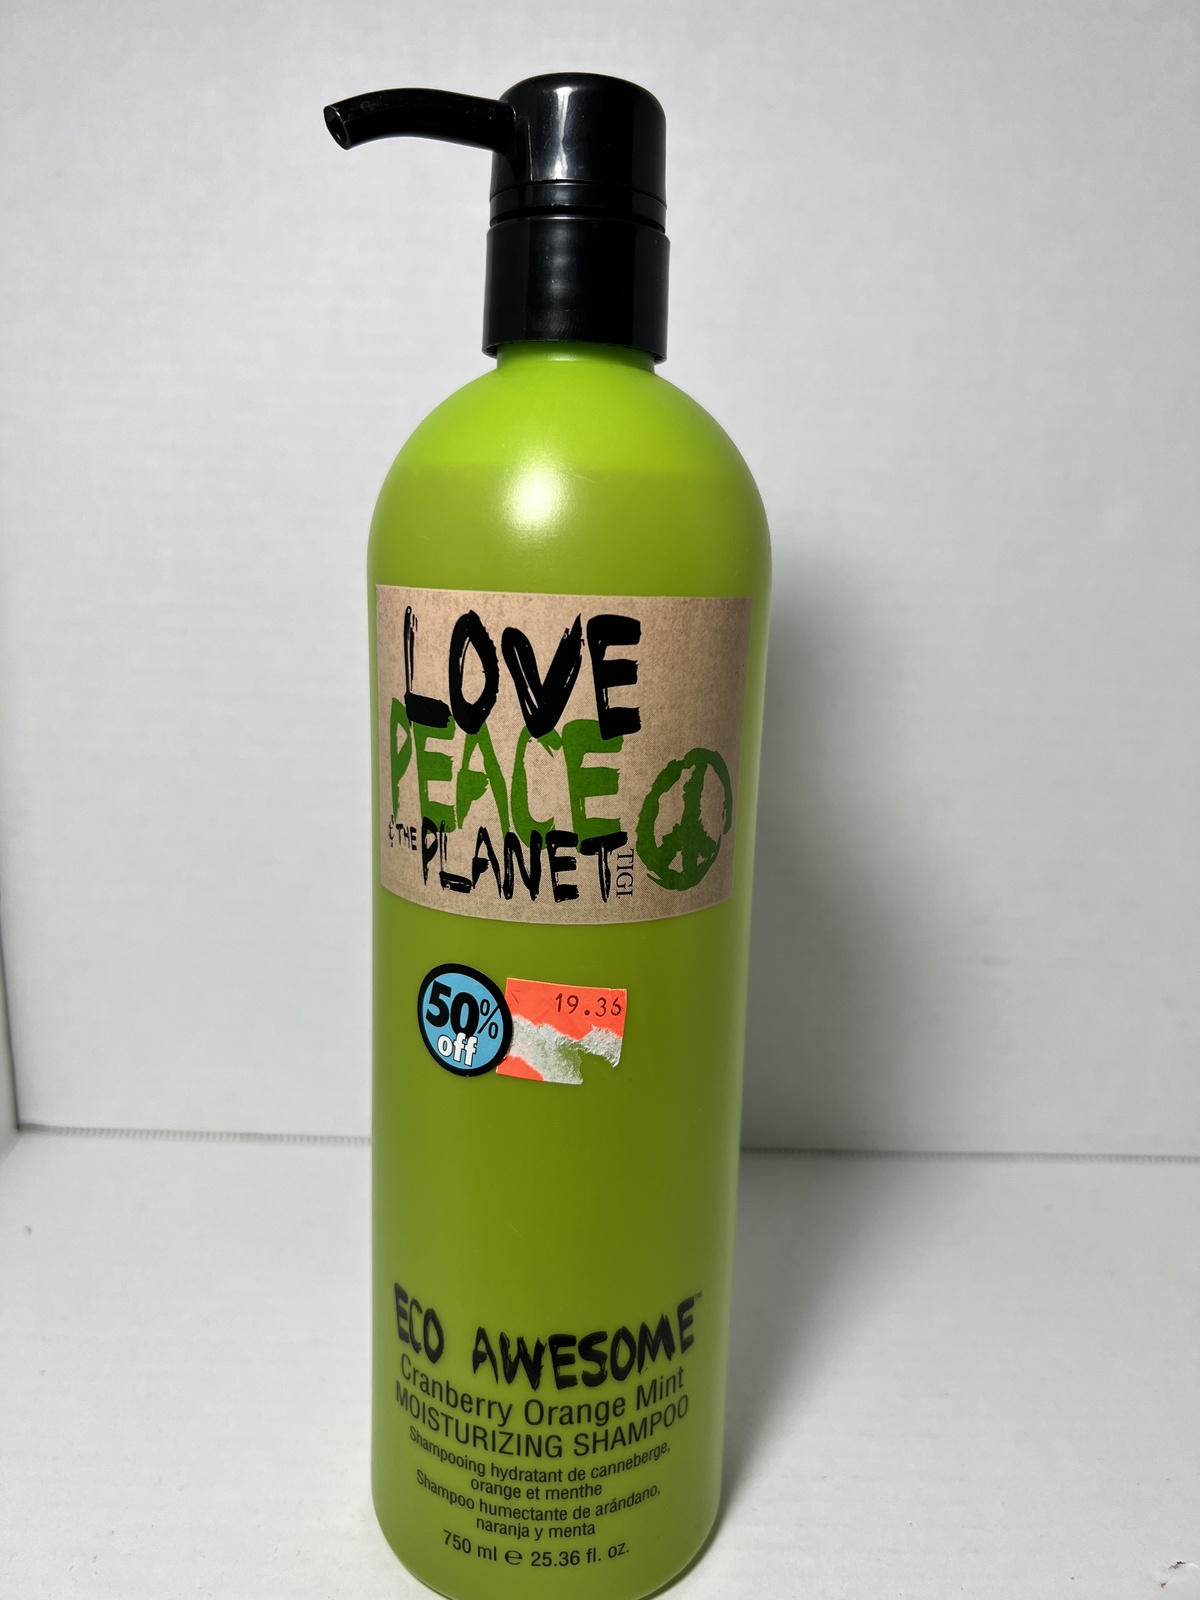 TIGI Love Peace and the Planet Cran-Orange Mint Moisturizing Shampoo 25.36oz - $49.99